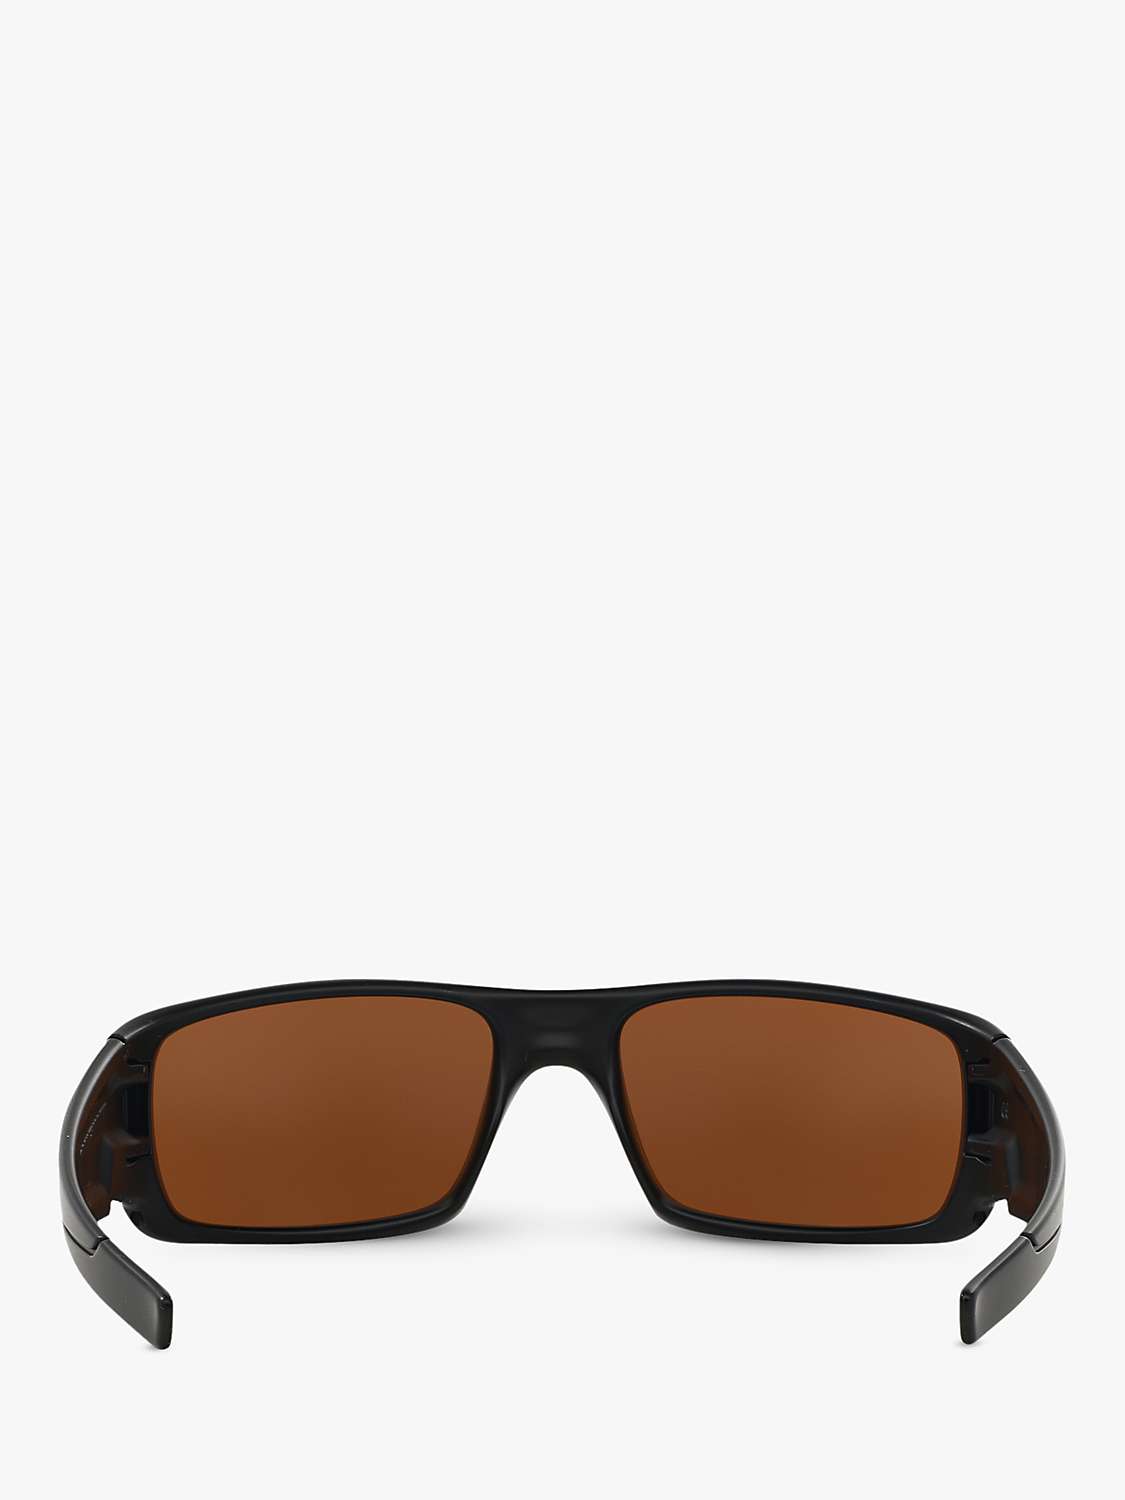 Buy Oakley OO9239 Men's Crankshaft Rectangular Sunglasses, Matte Black/Brown Online at johnlewis.com